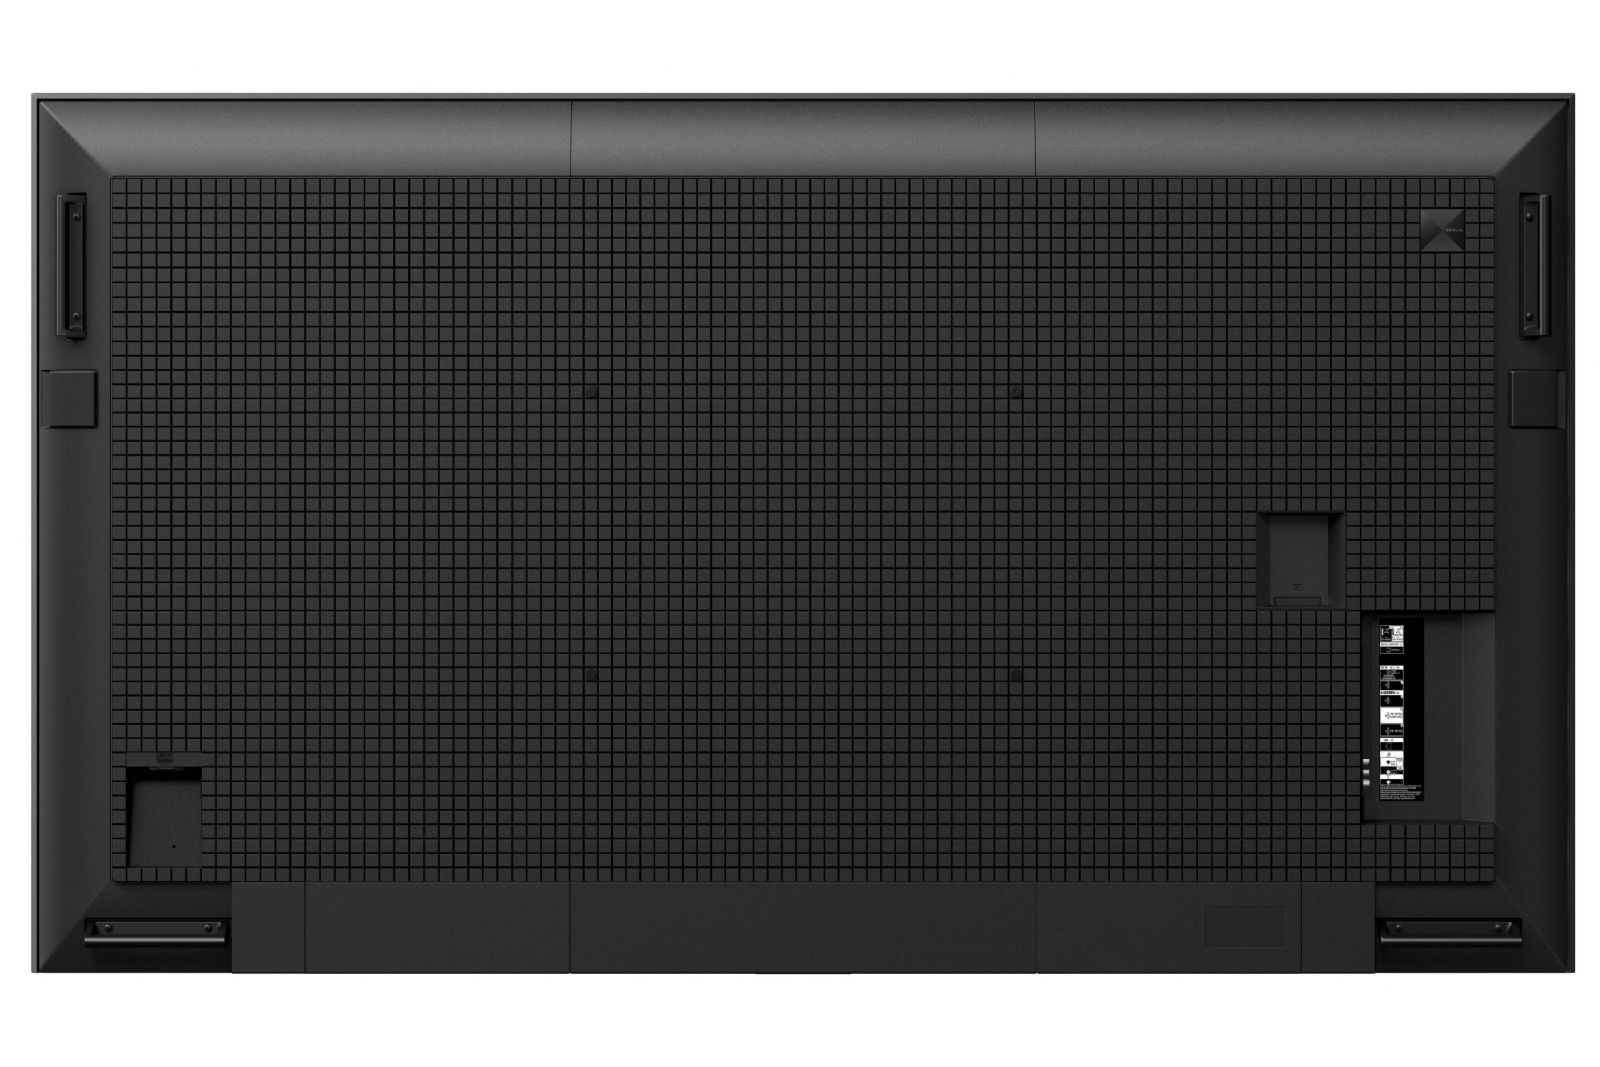 TV-apparater Sony XR-65X90L Bravia XR LED Google-TV